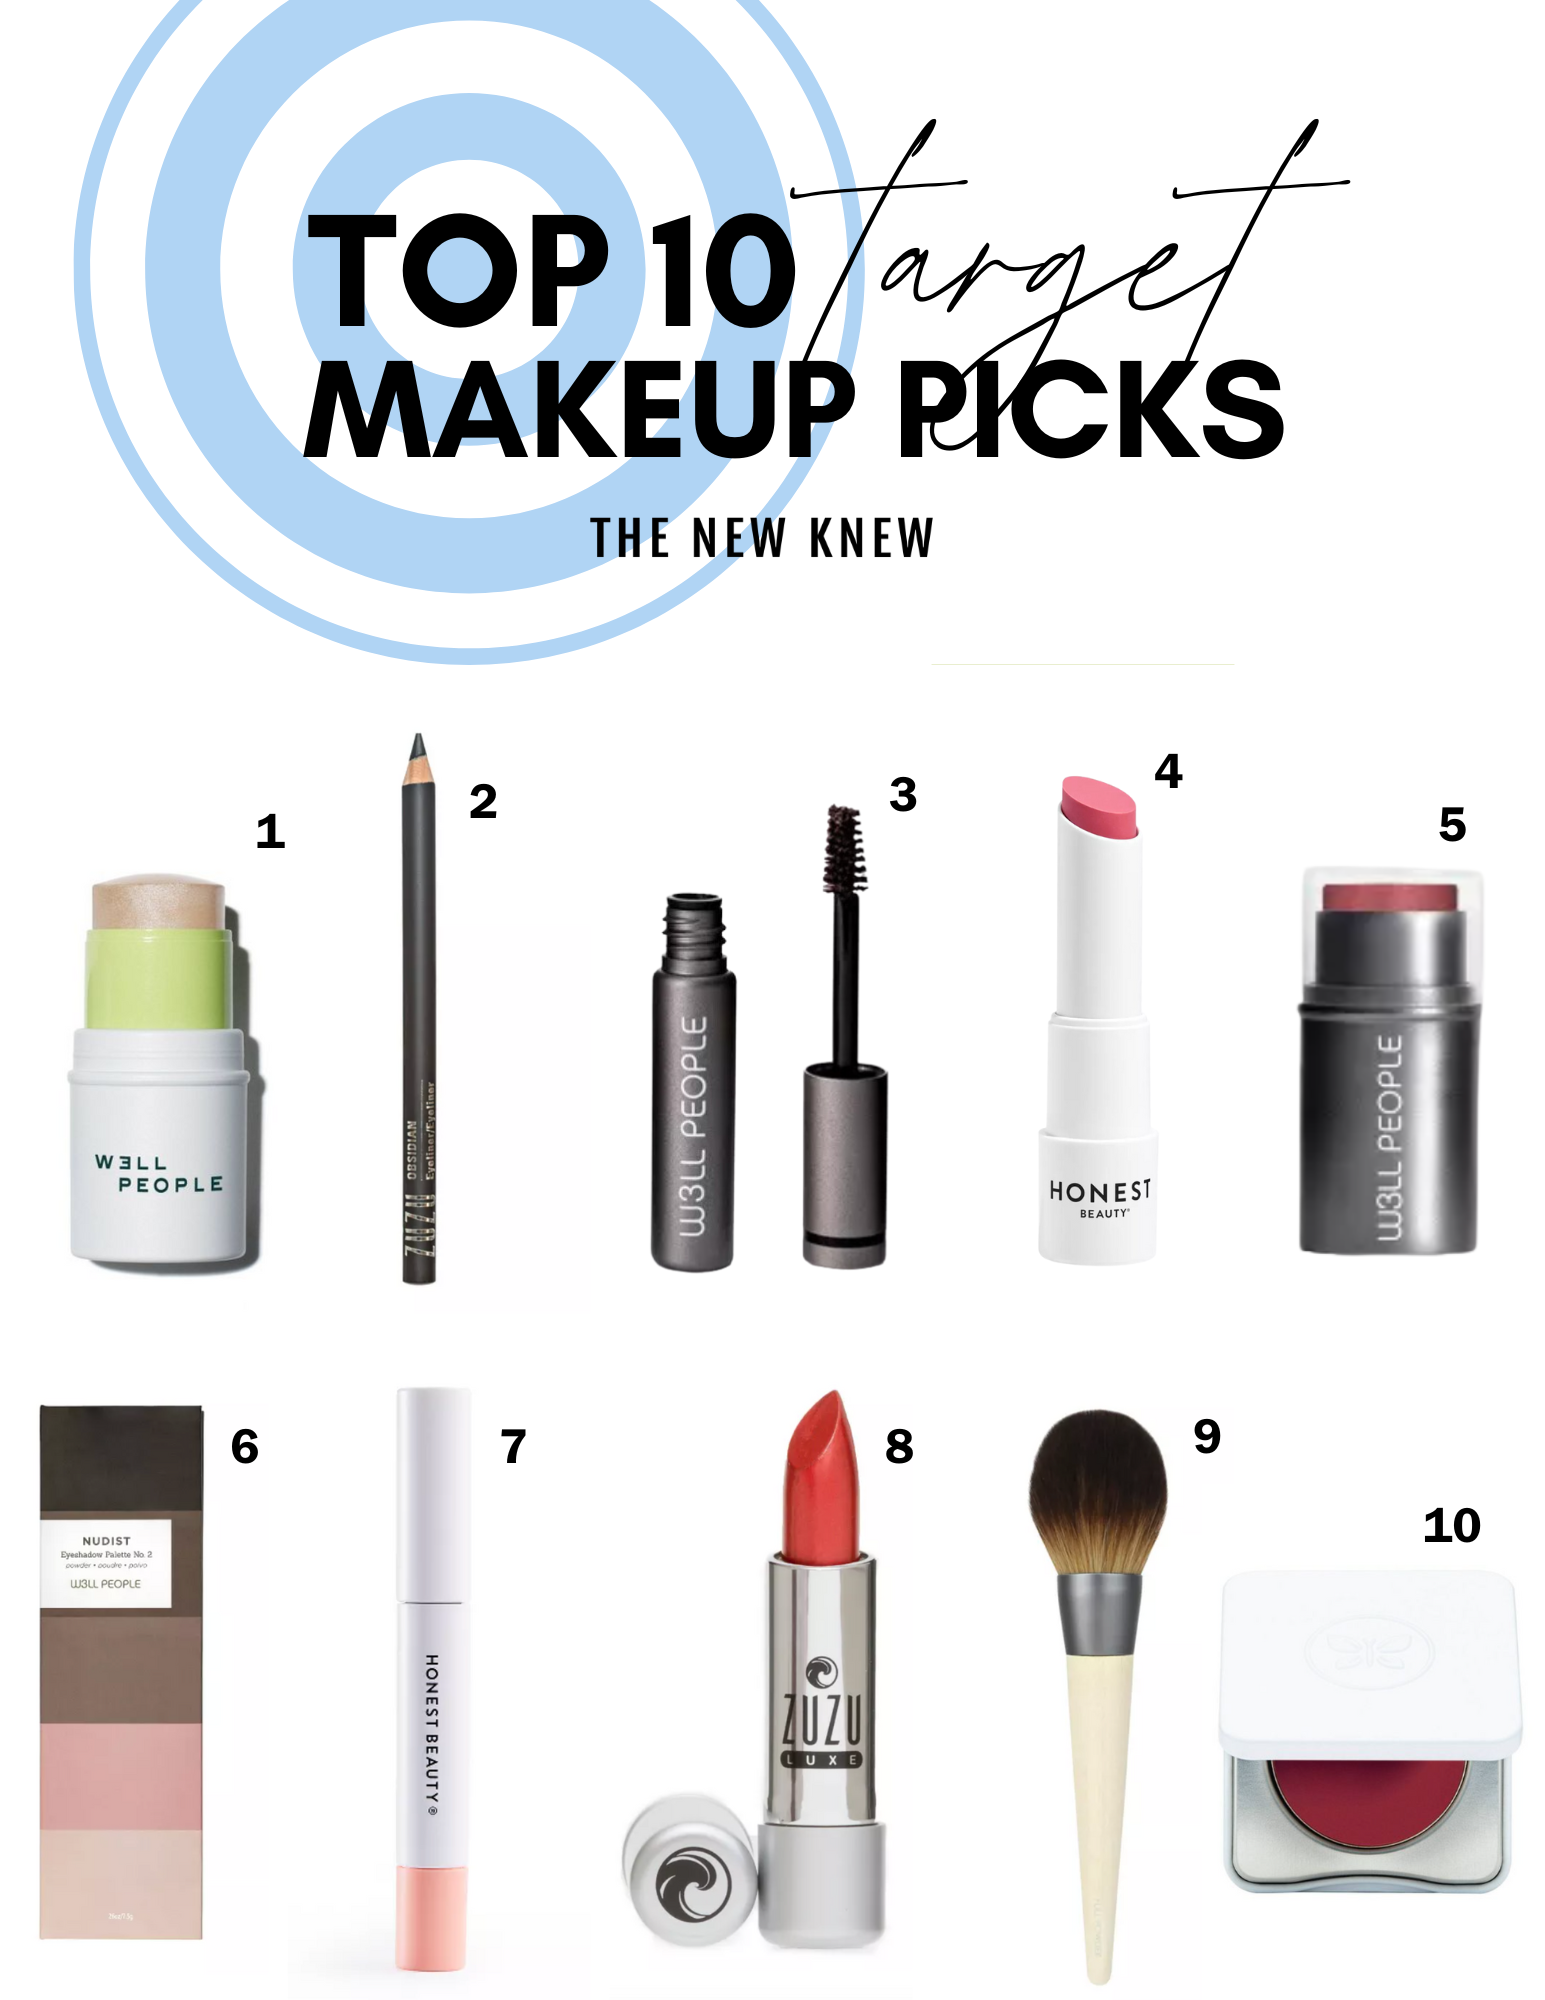 Top 10 makeup picks at Target by TNK.